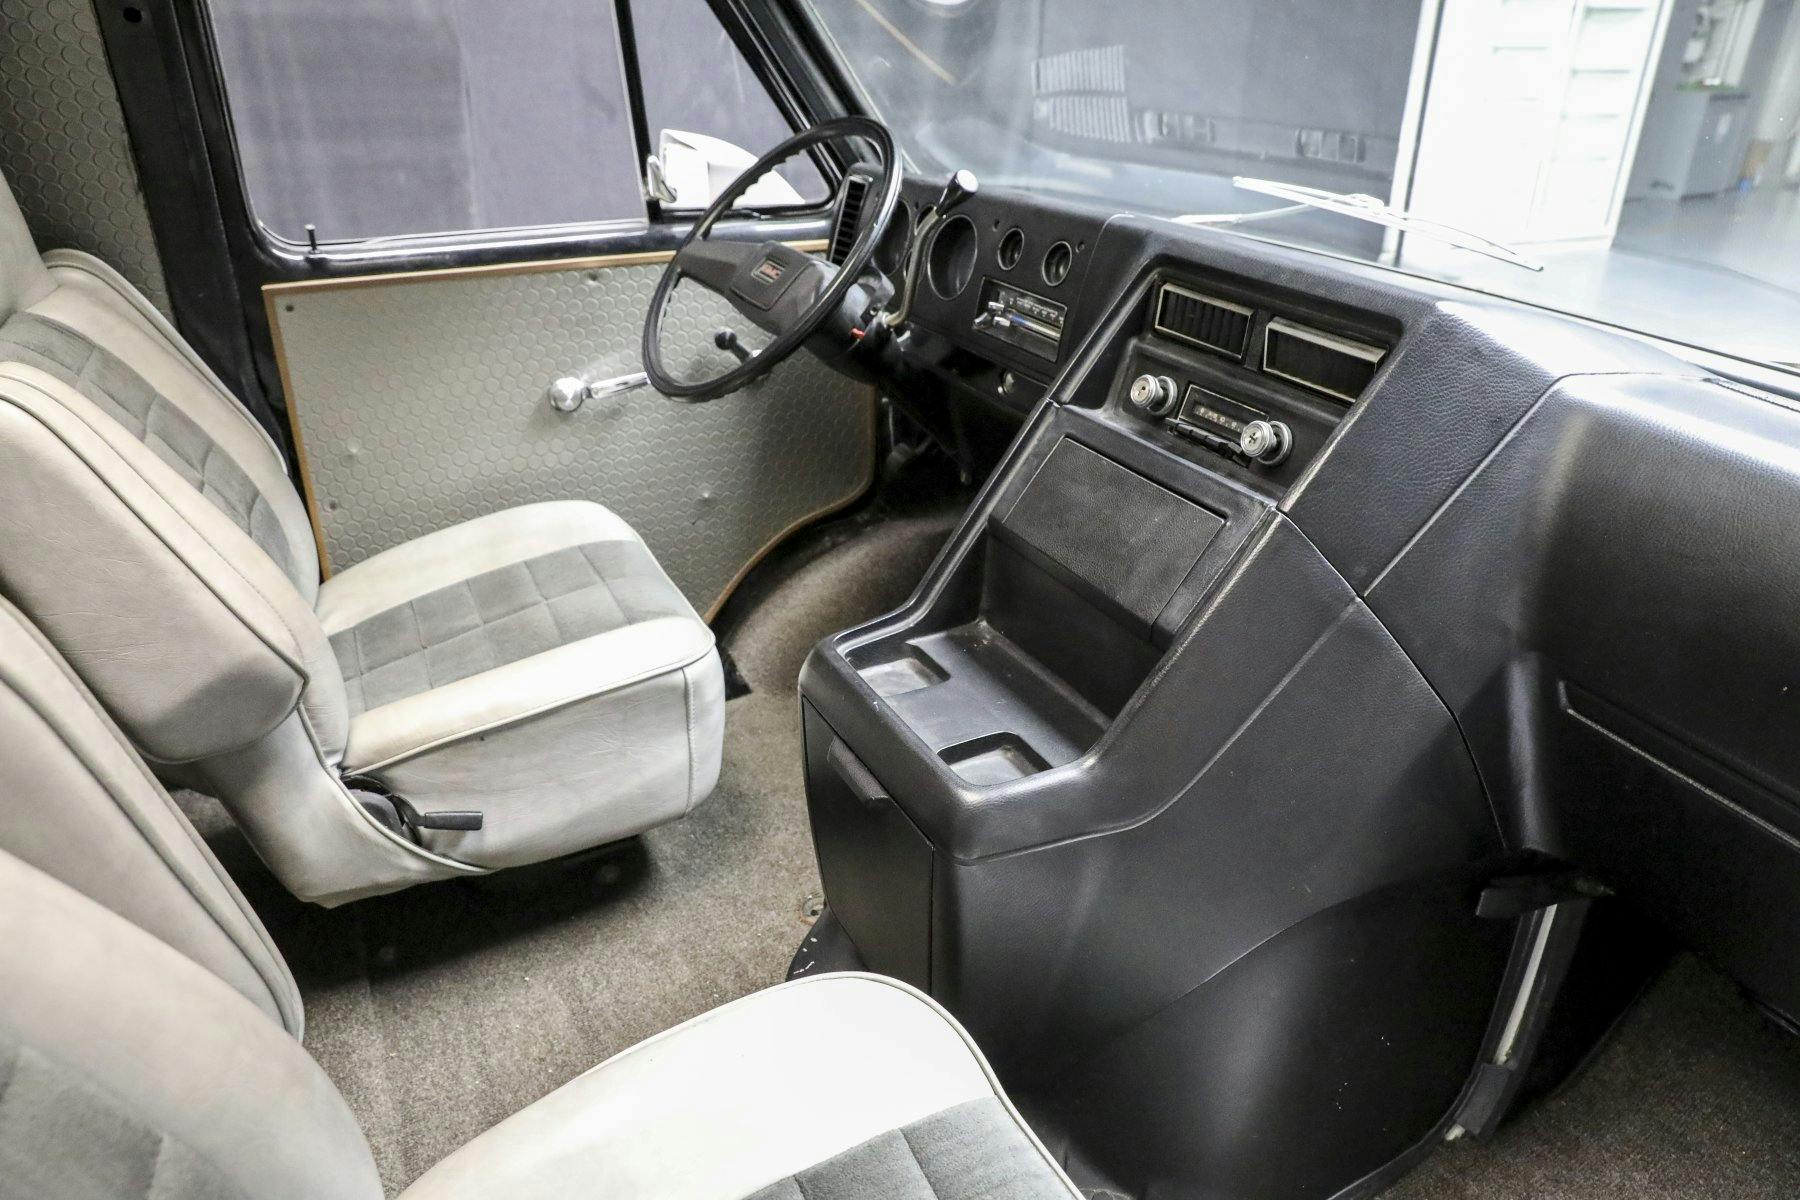 A-Team GMC G-Series 83 Van interior front